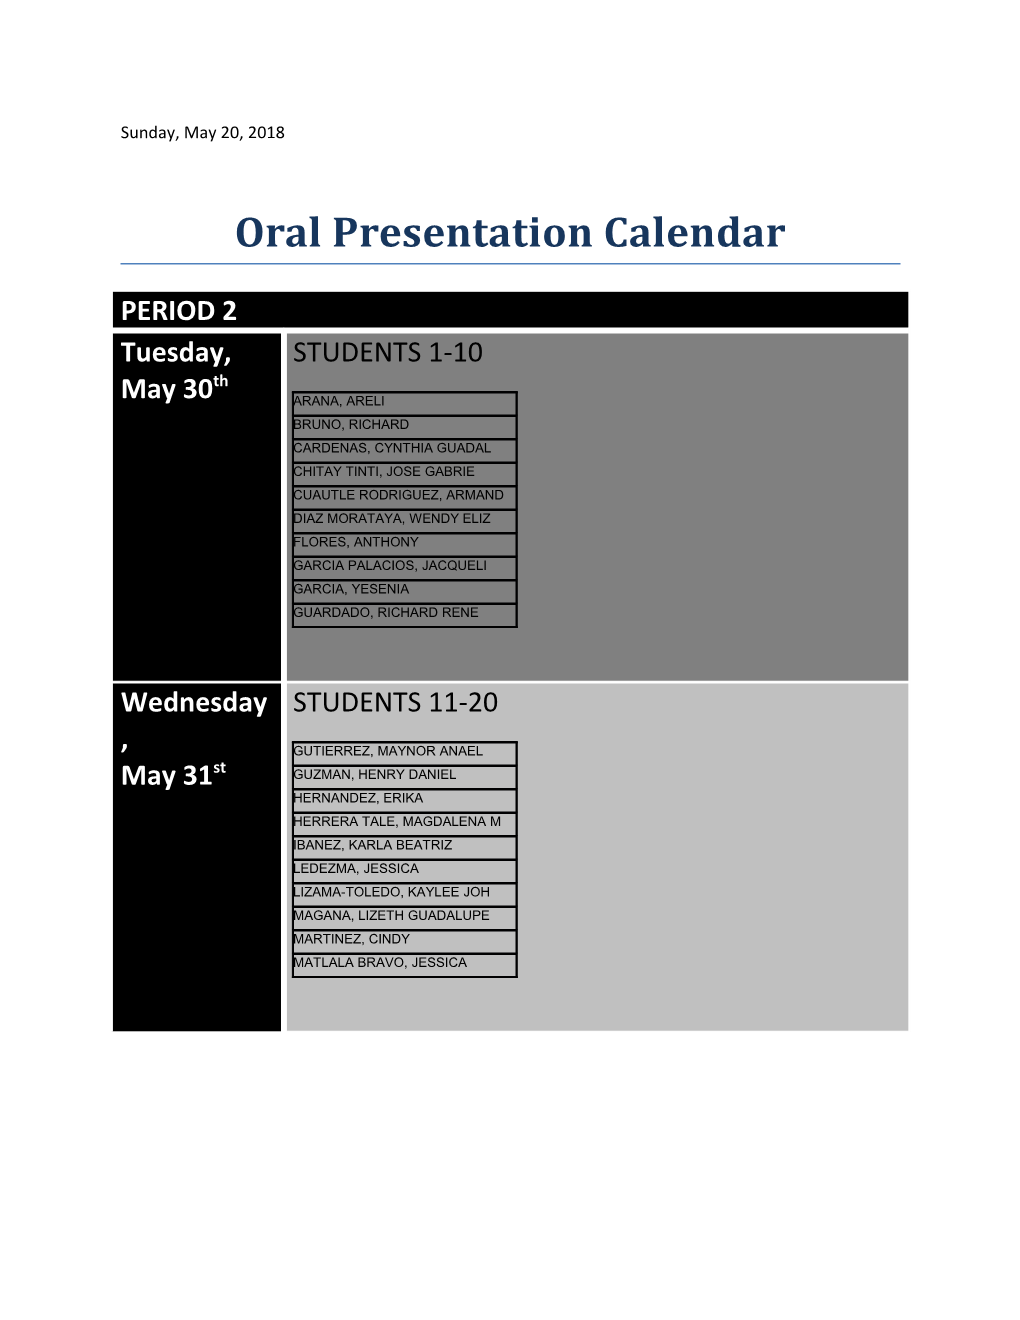 Oral Presentation Calendar